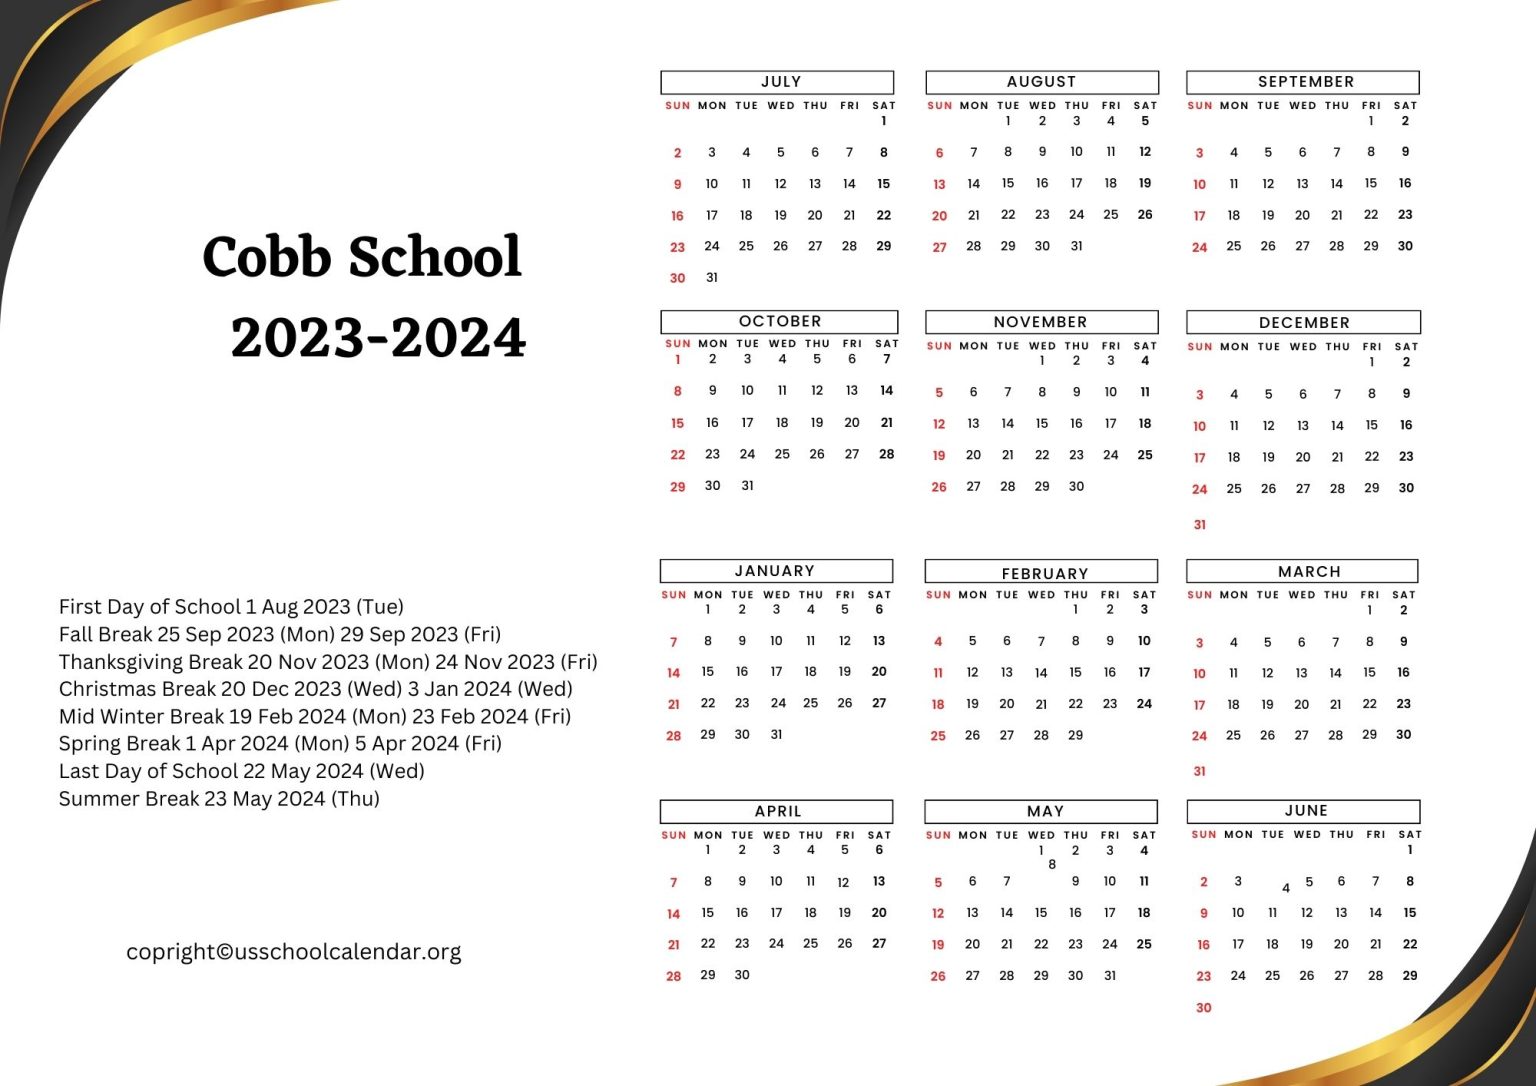 Cobb School Calendar With Holidays 2023 2024